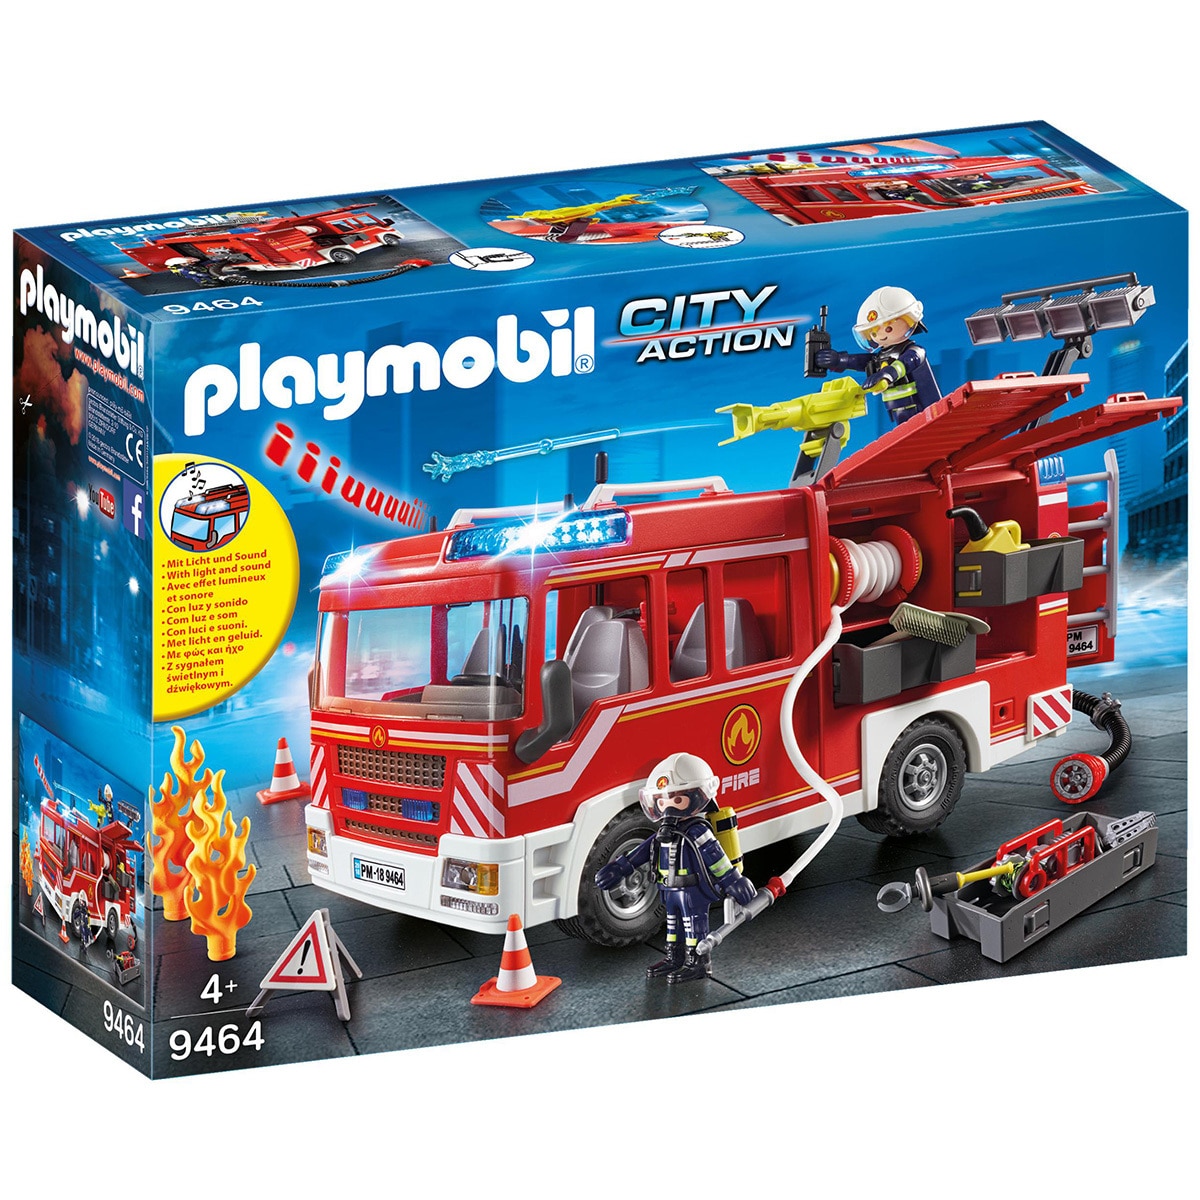 Playmobil - Fire Engine